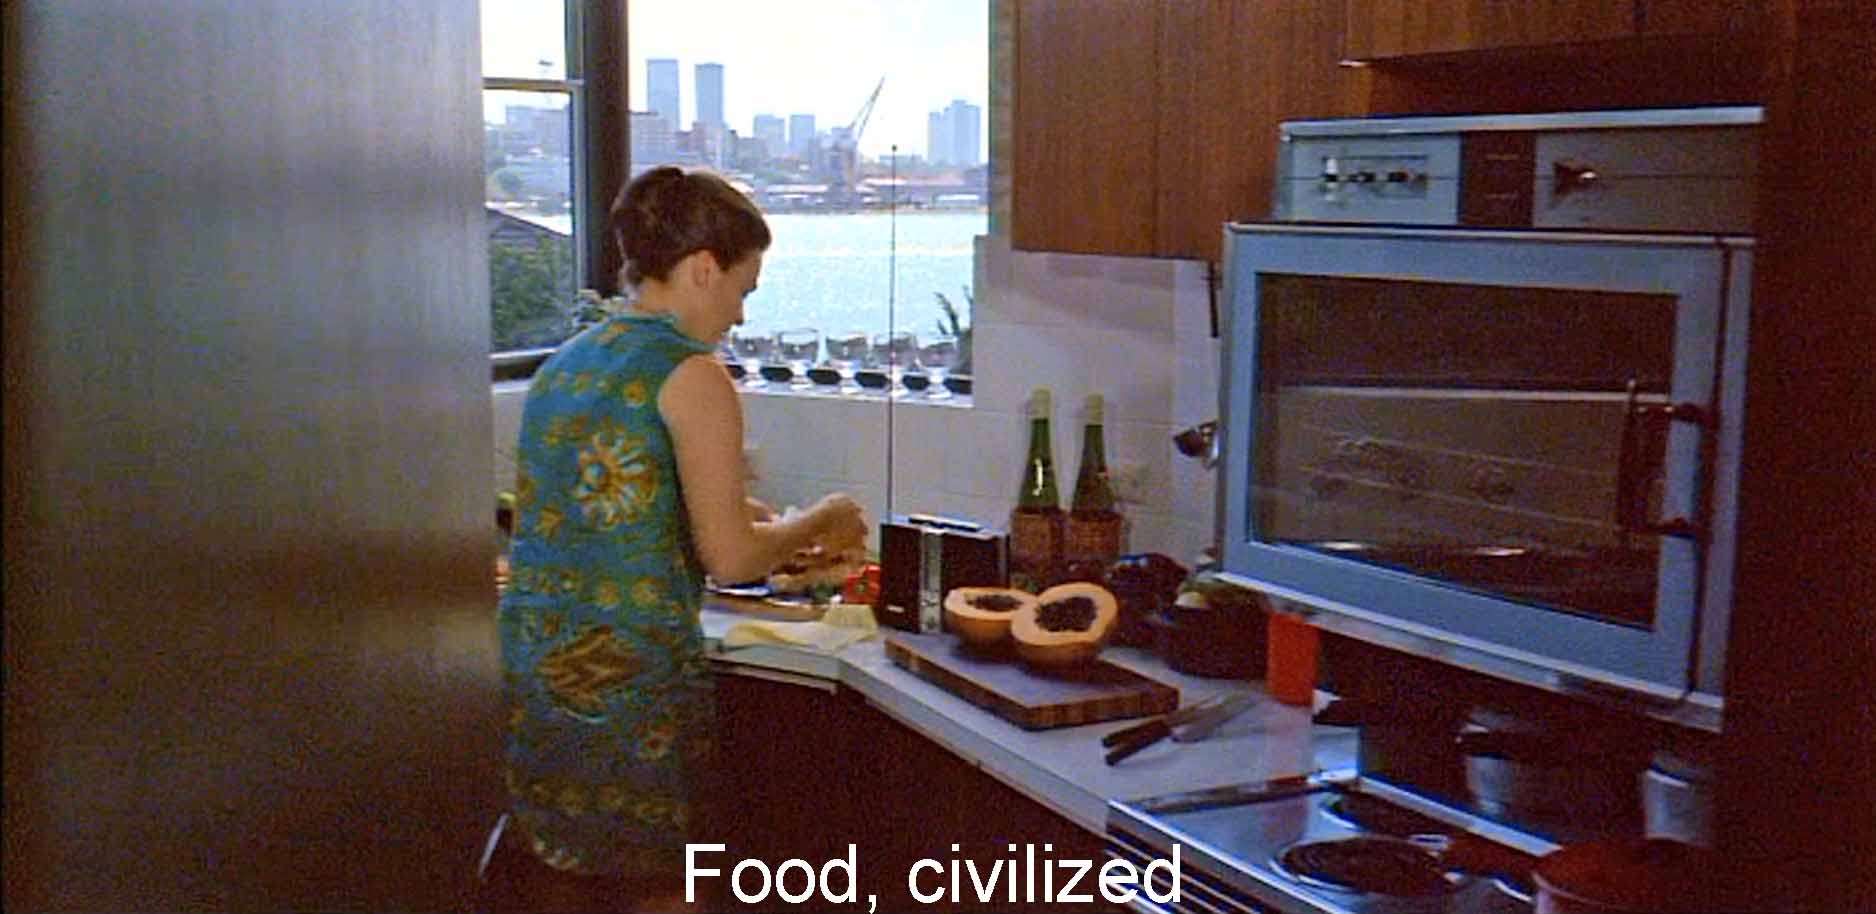 Food, civilized